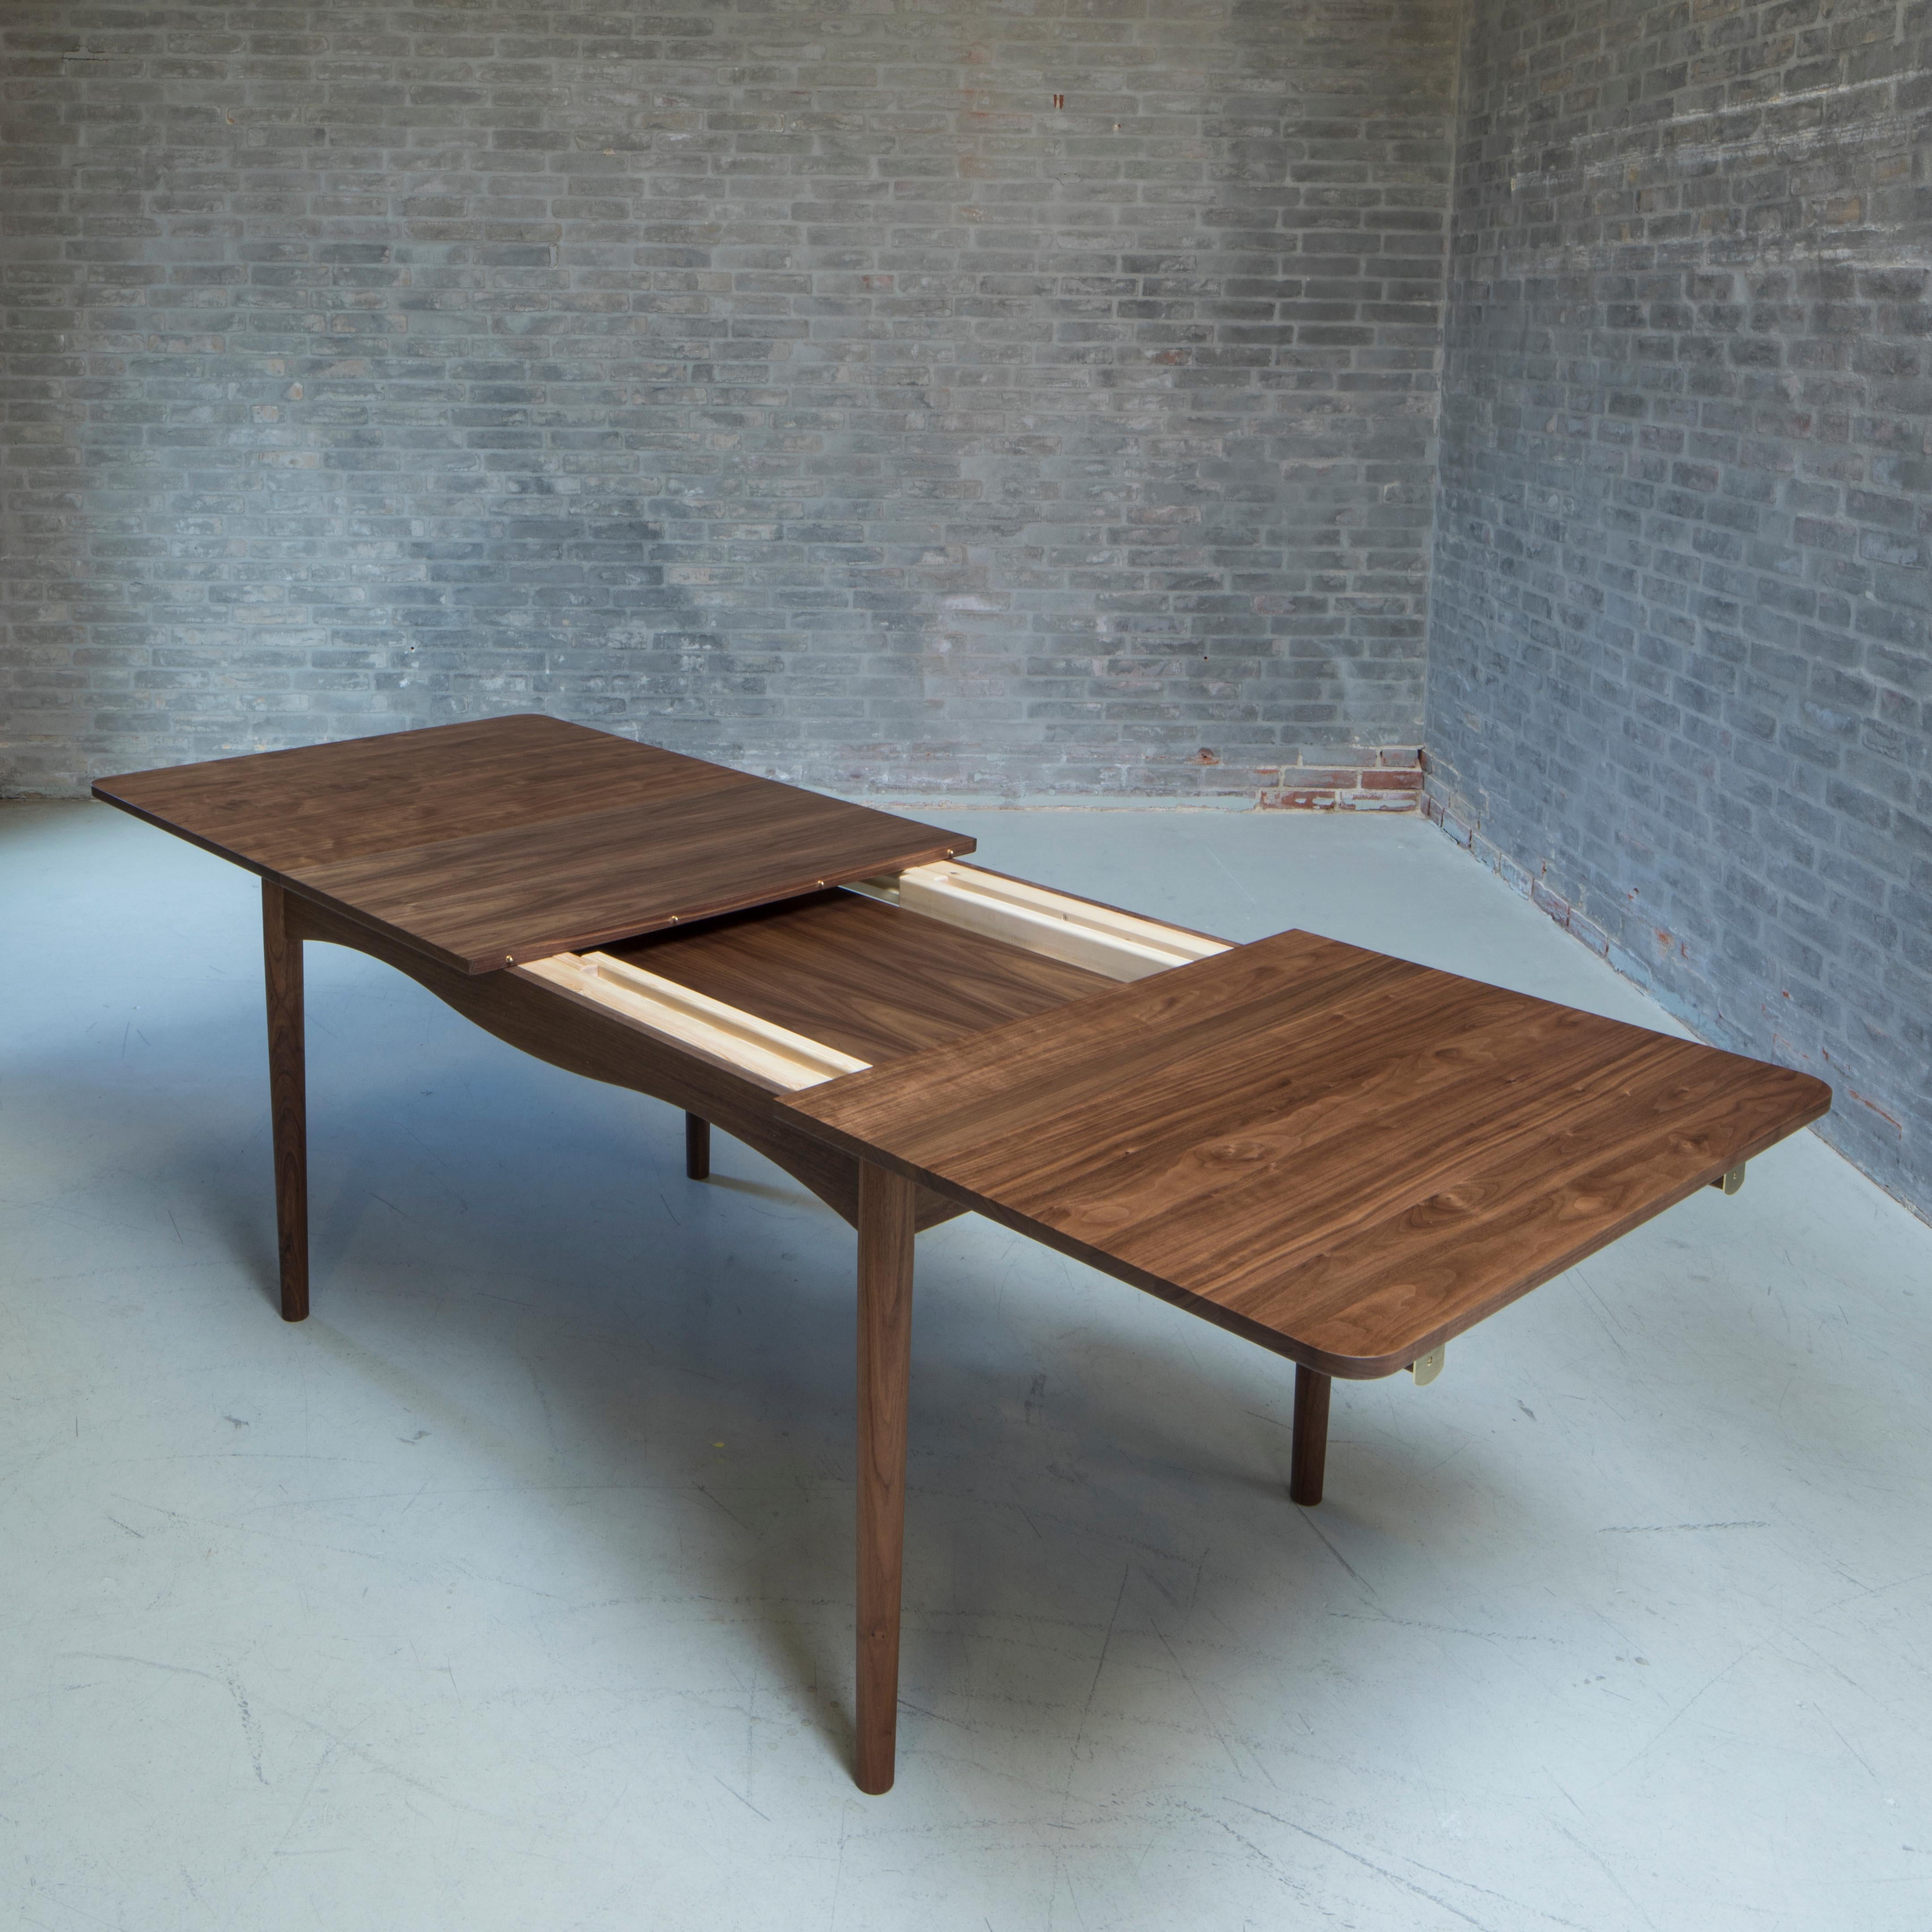 Finn Juhl Borvirke Table Wood with Extensions Leaves 3